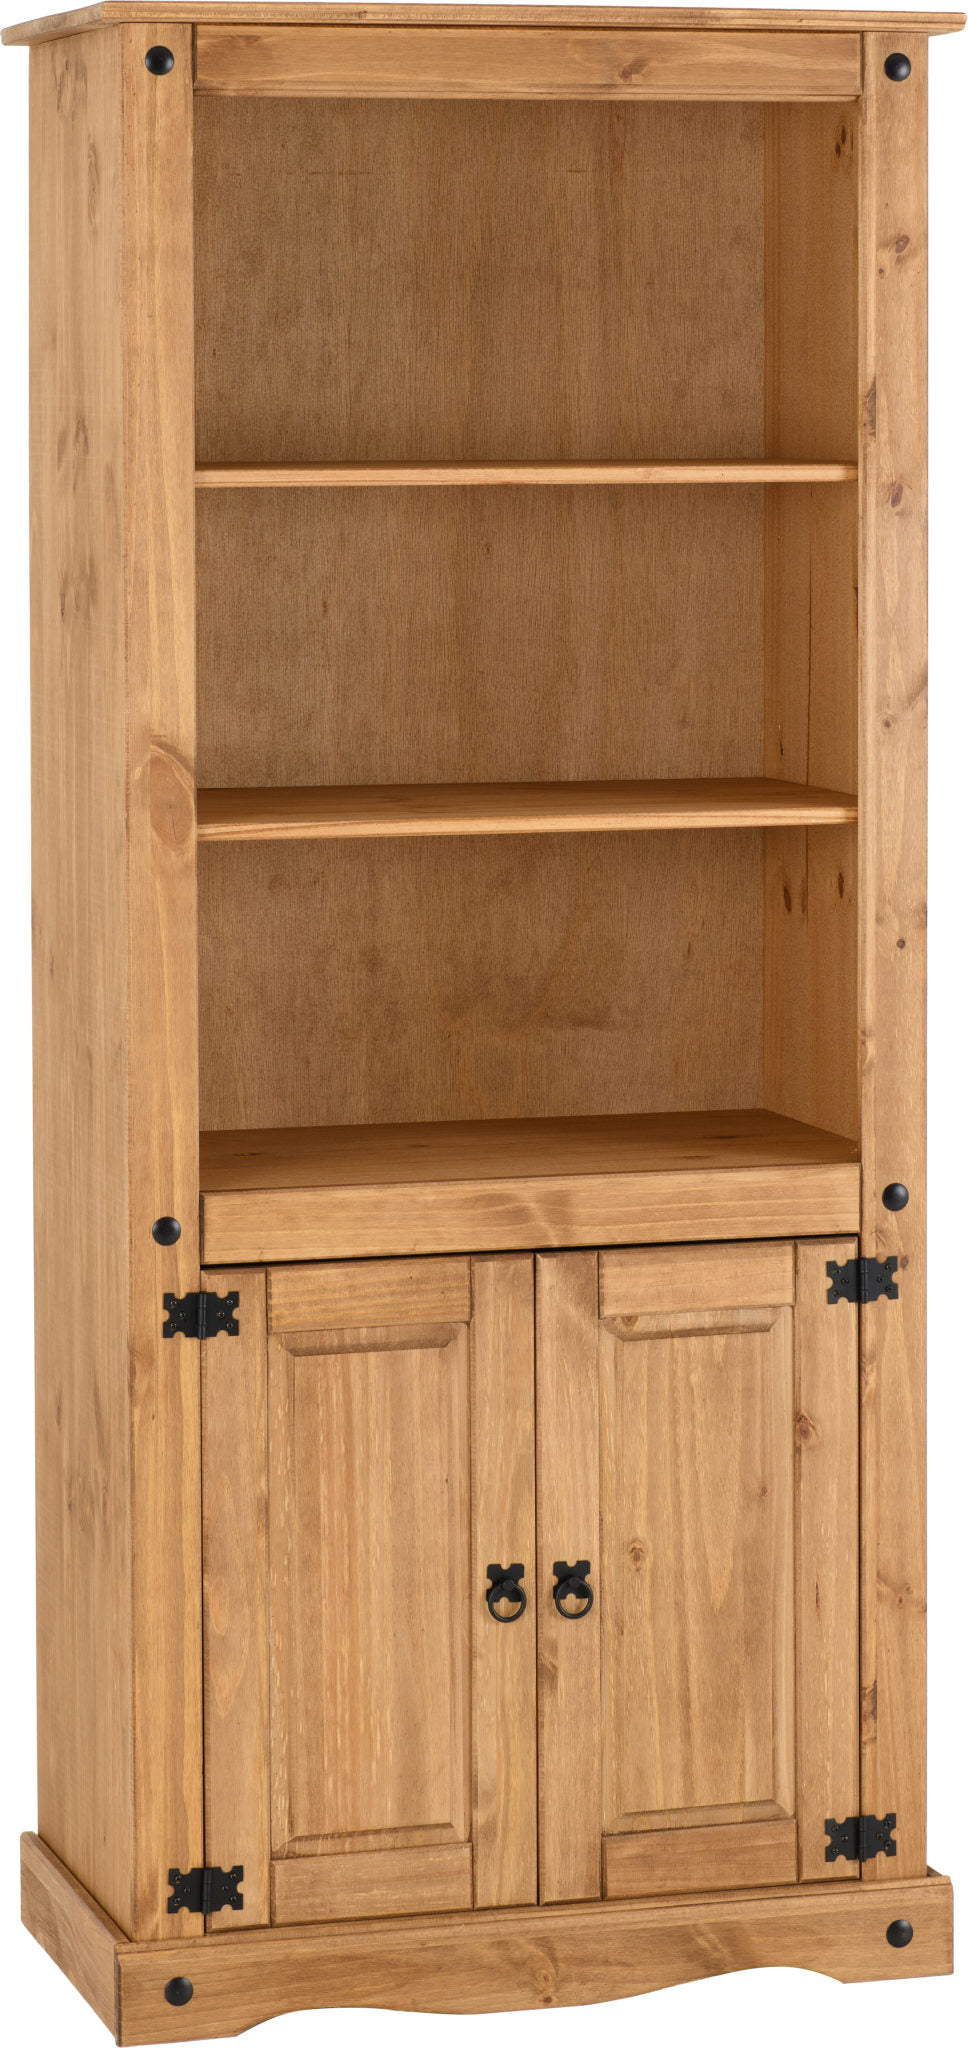 Corona 2 Door Display Unit/Bookcase - Distressed Waxed Pine